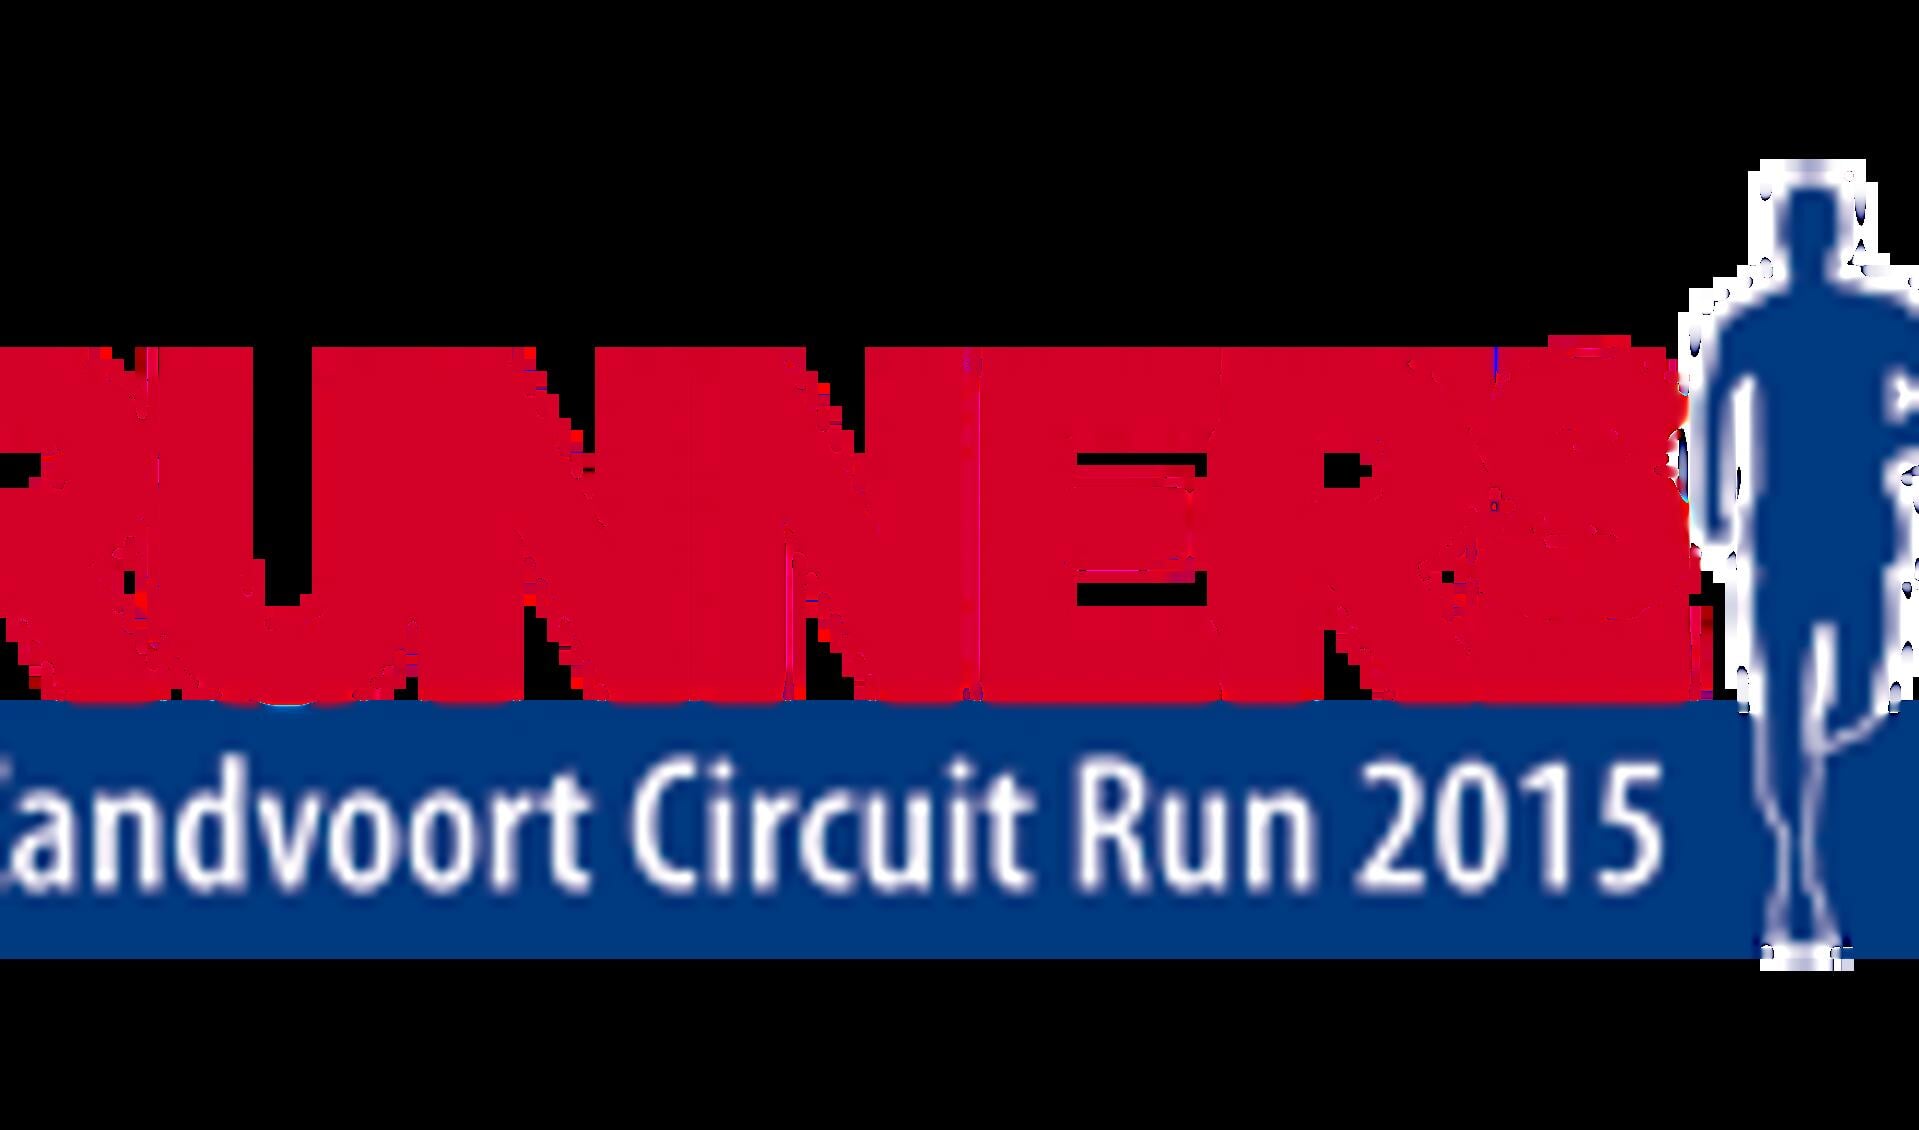 Uitbreiding Runner's World Zandvoort Circuit Run weekend